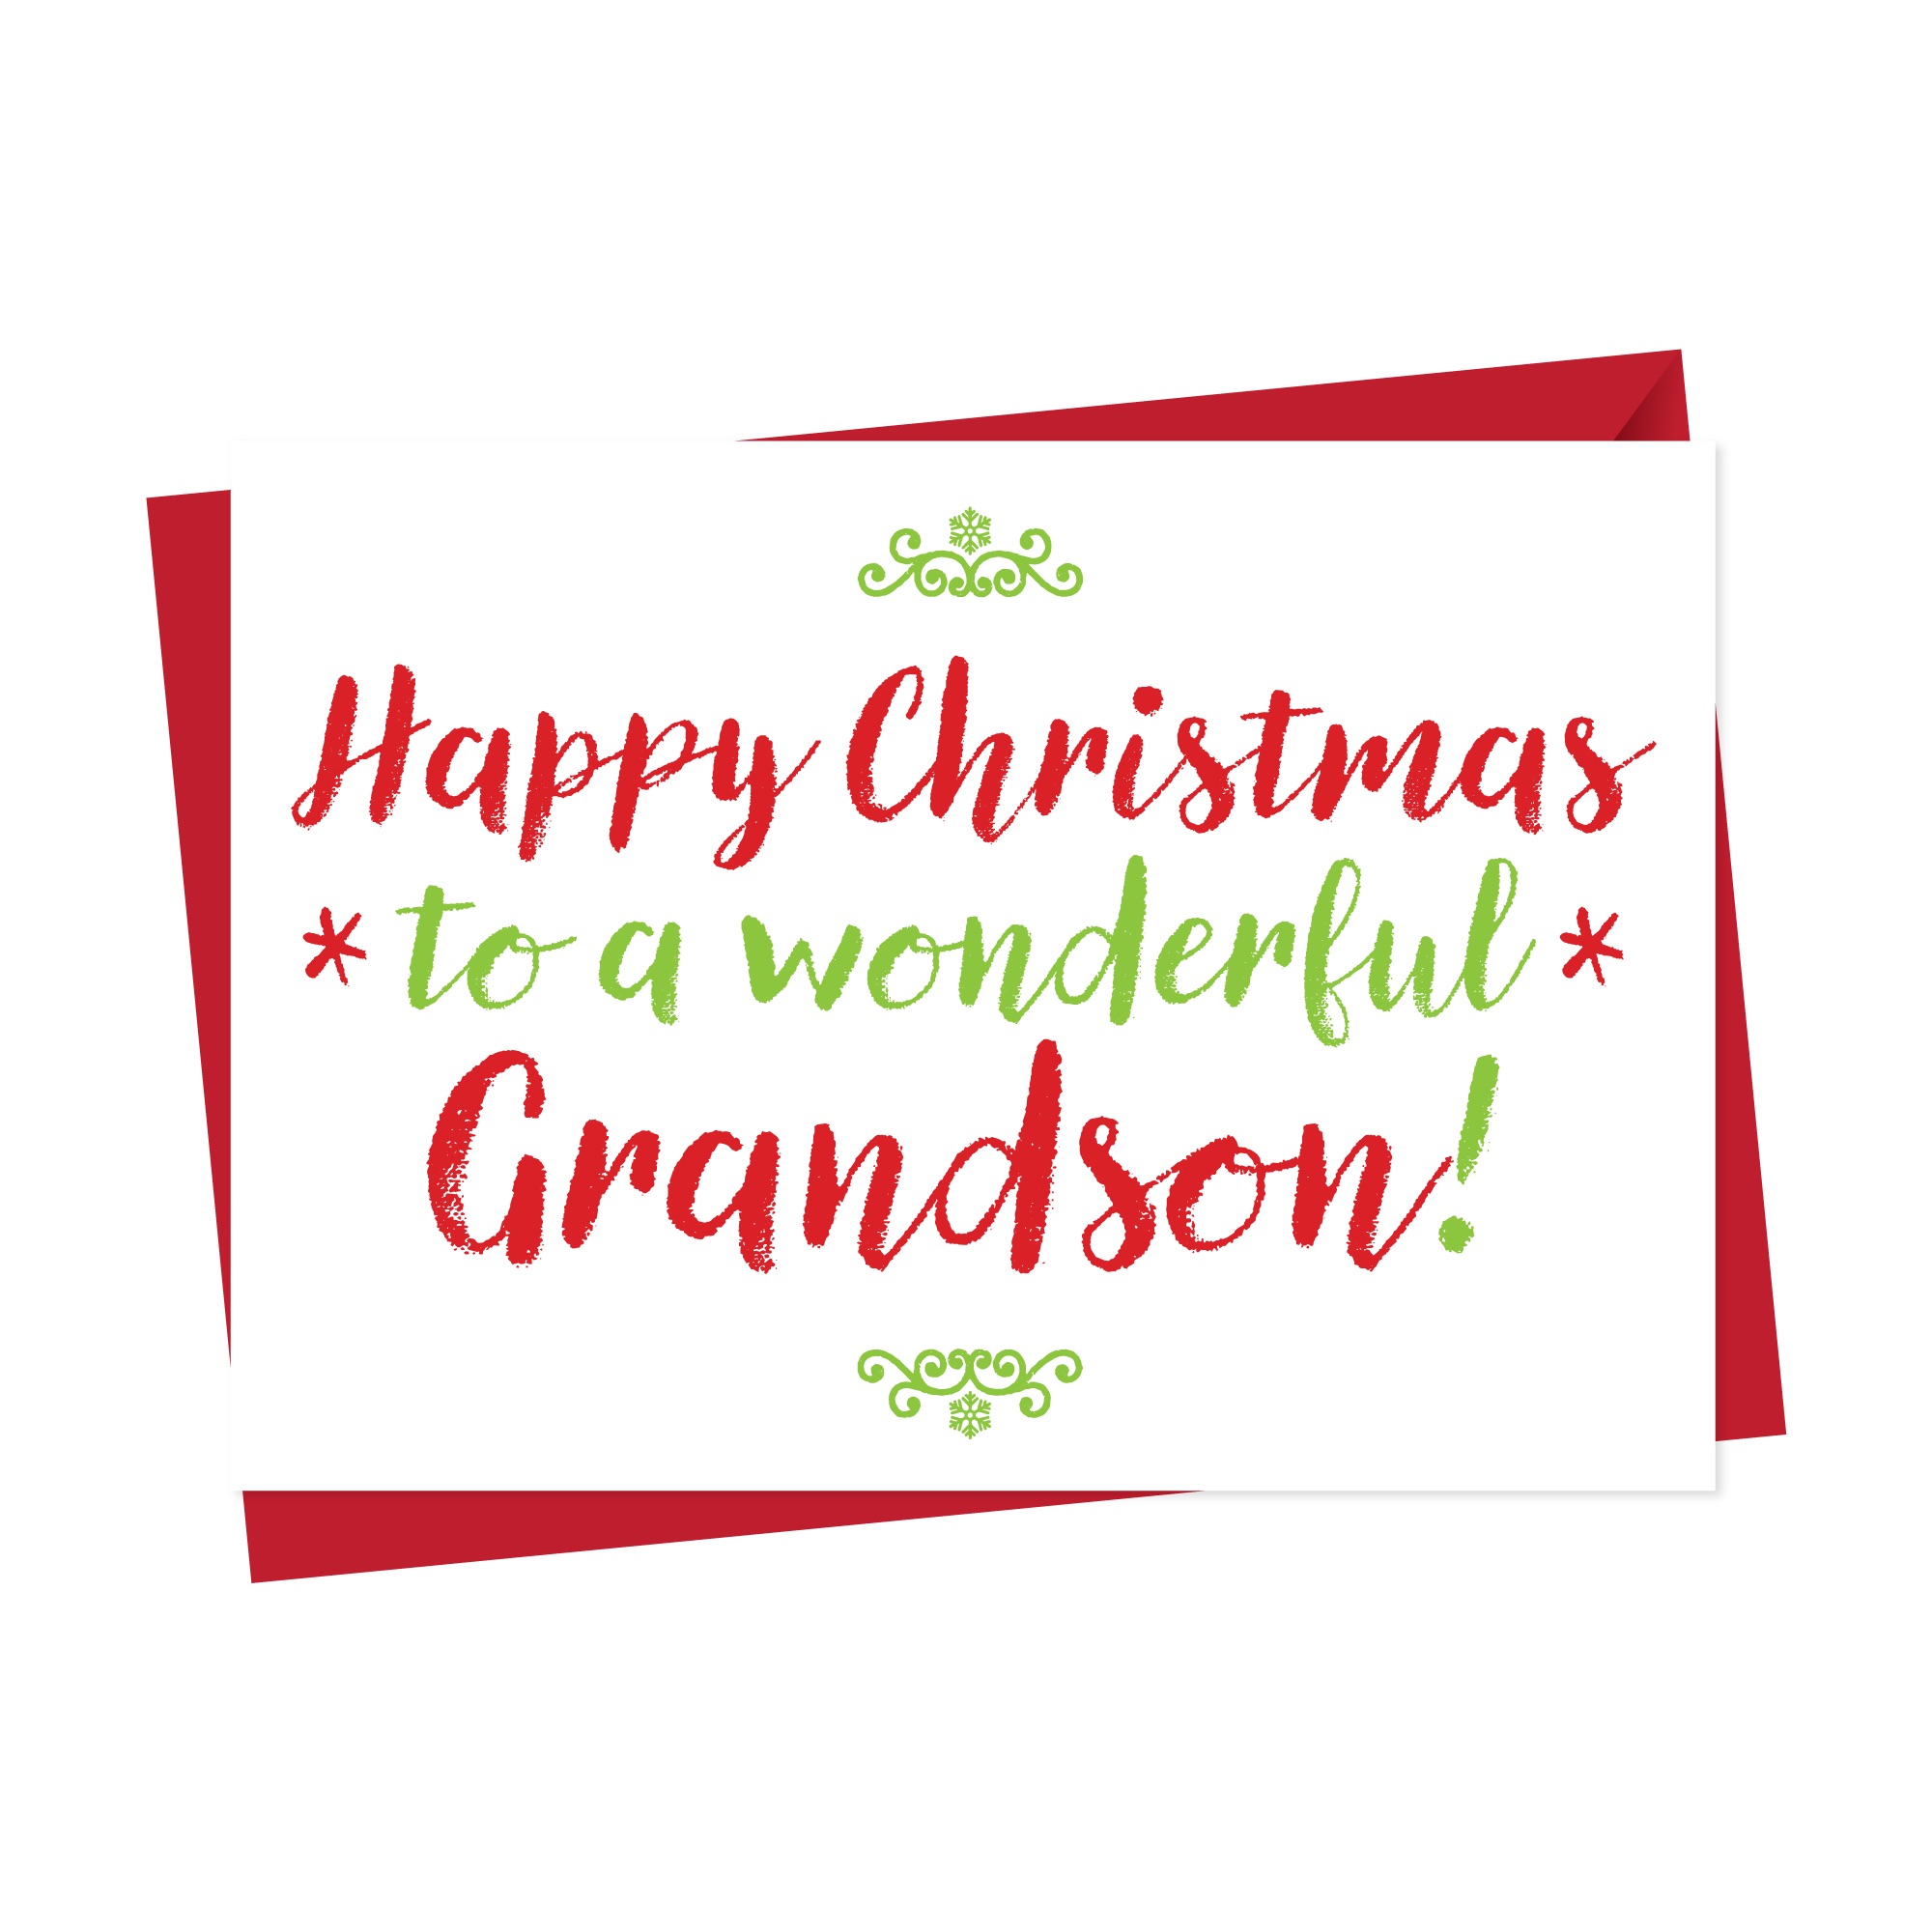 Christmas Card For Wonderful Grandson